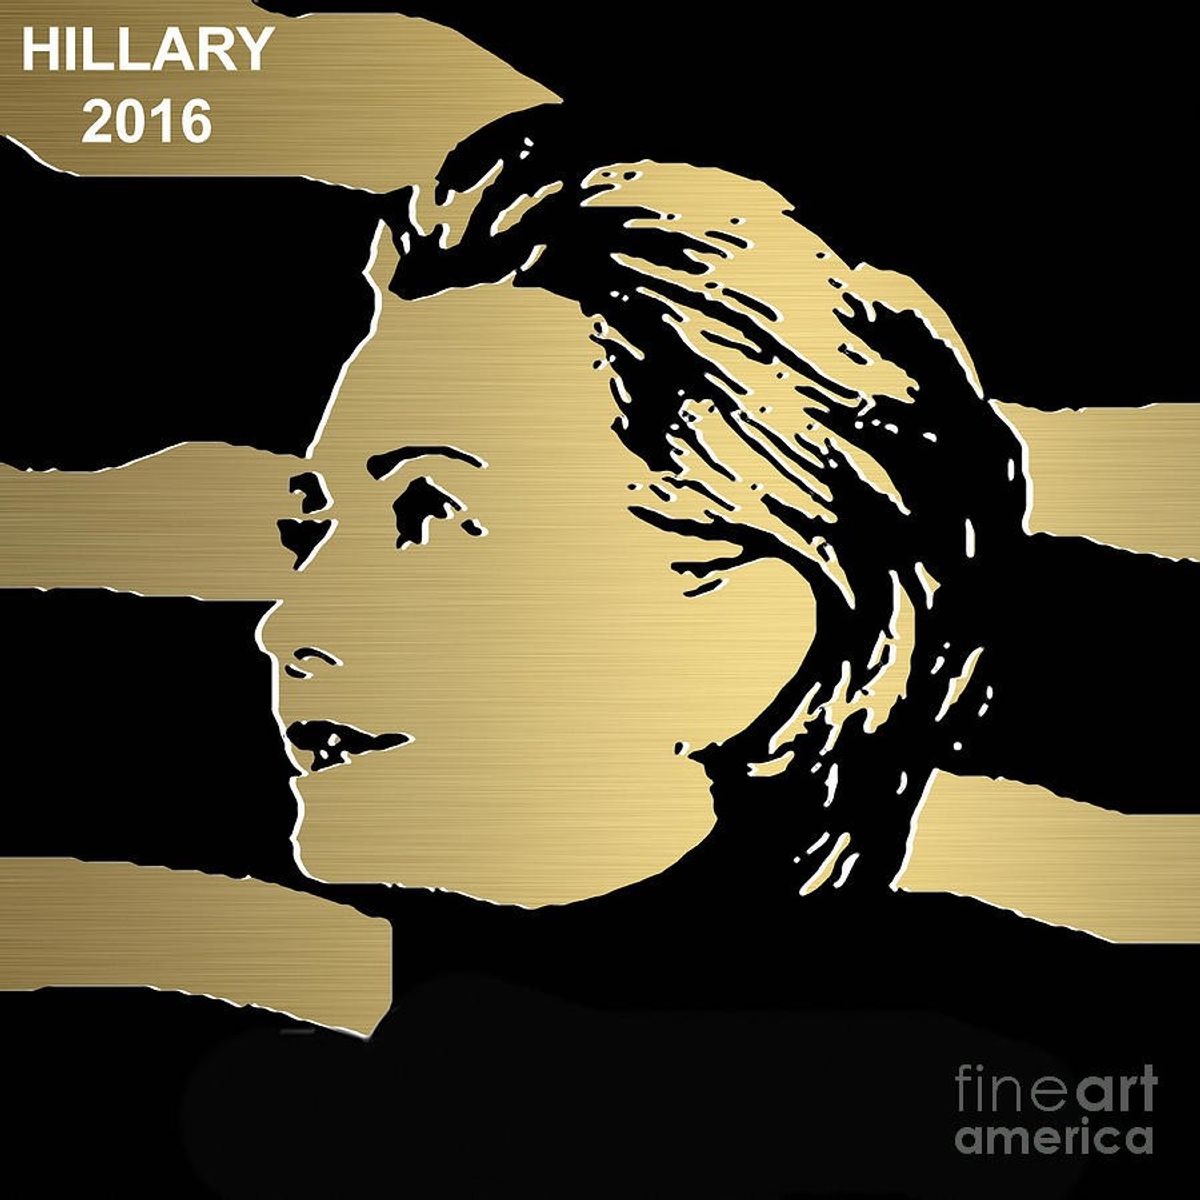 Hilary Clinton's Election Journey